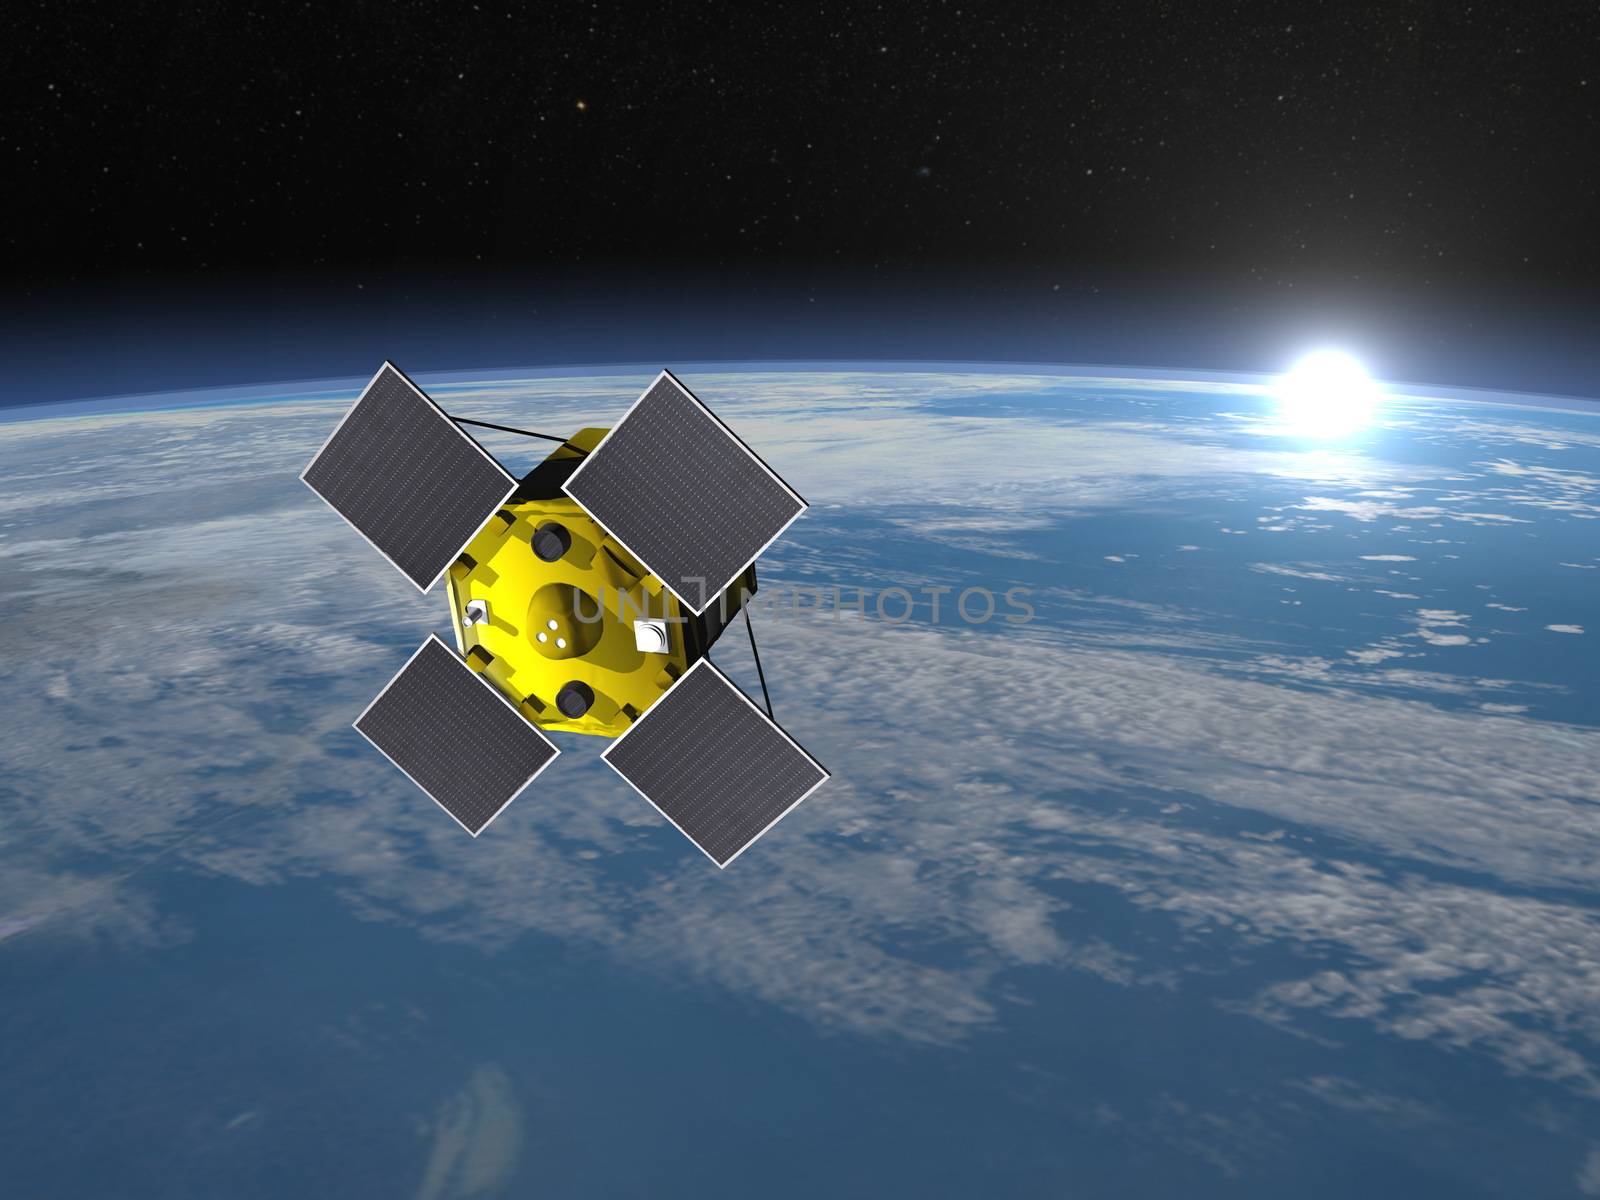 Acrimsat satellite - 3D render by Elenaphotos21